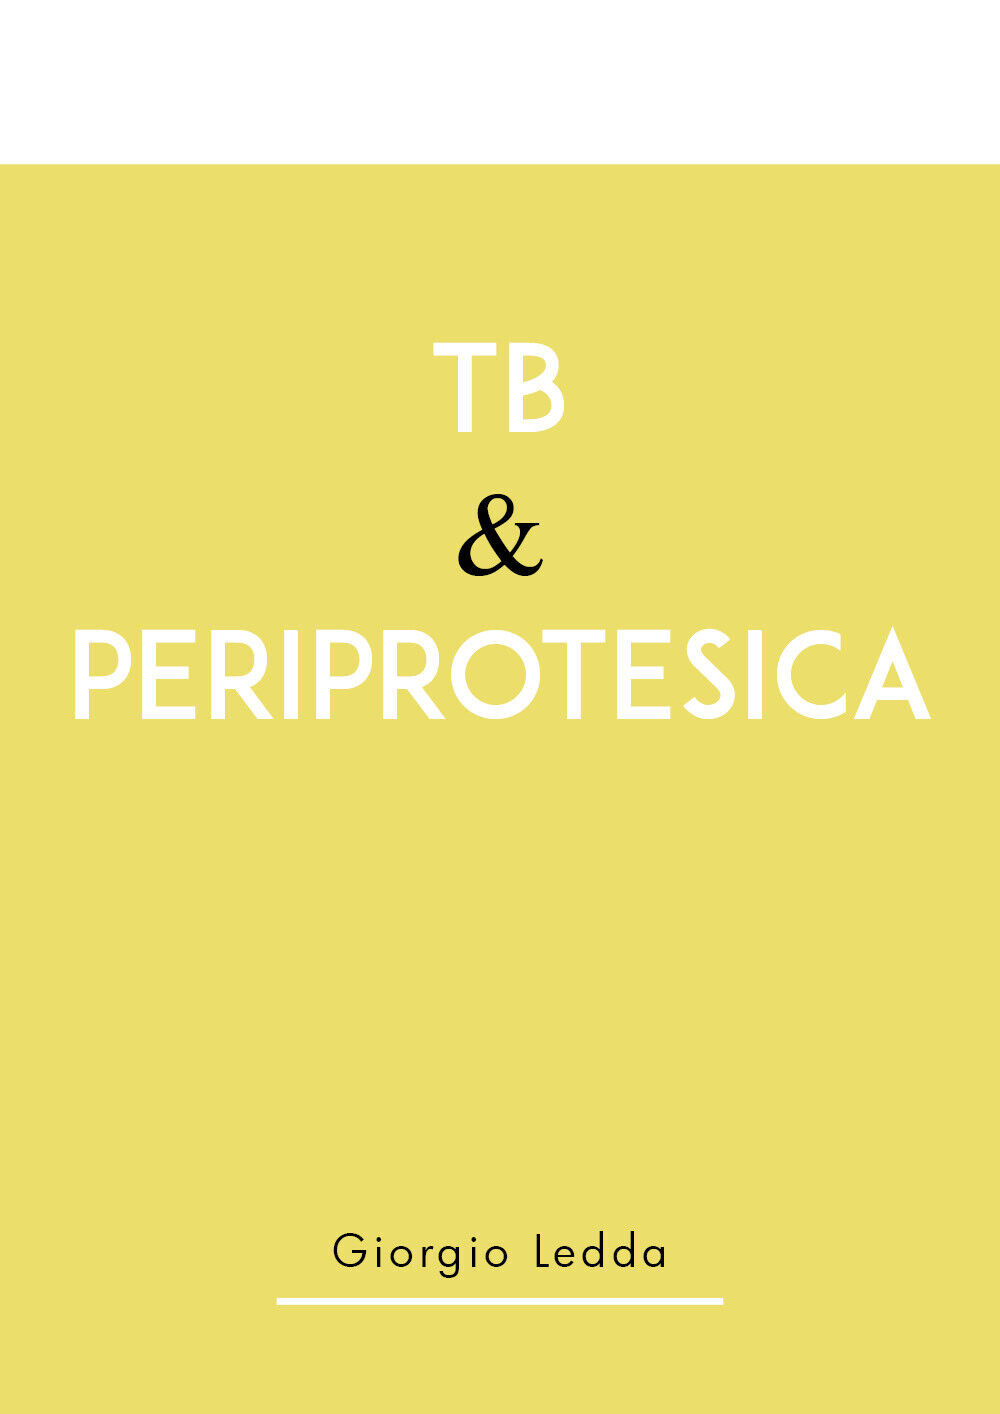 Tb & Periprotesica  di Giorgio Ledda,  2019,  Youcanprint